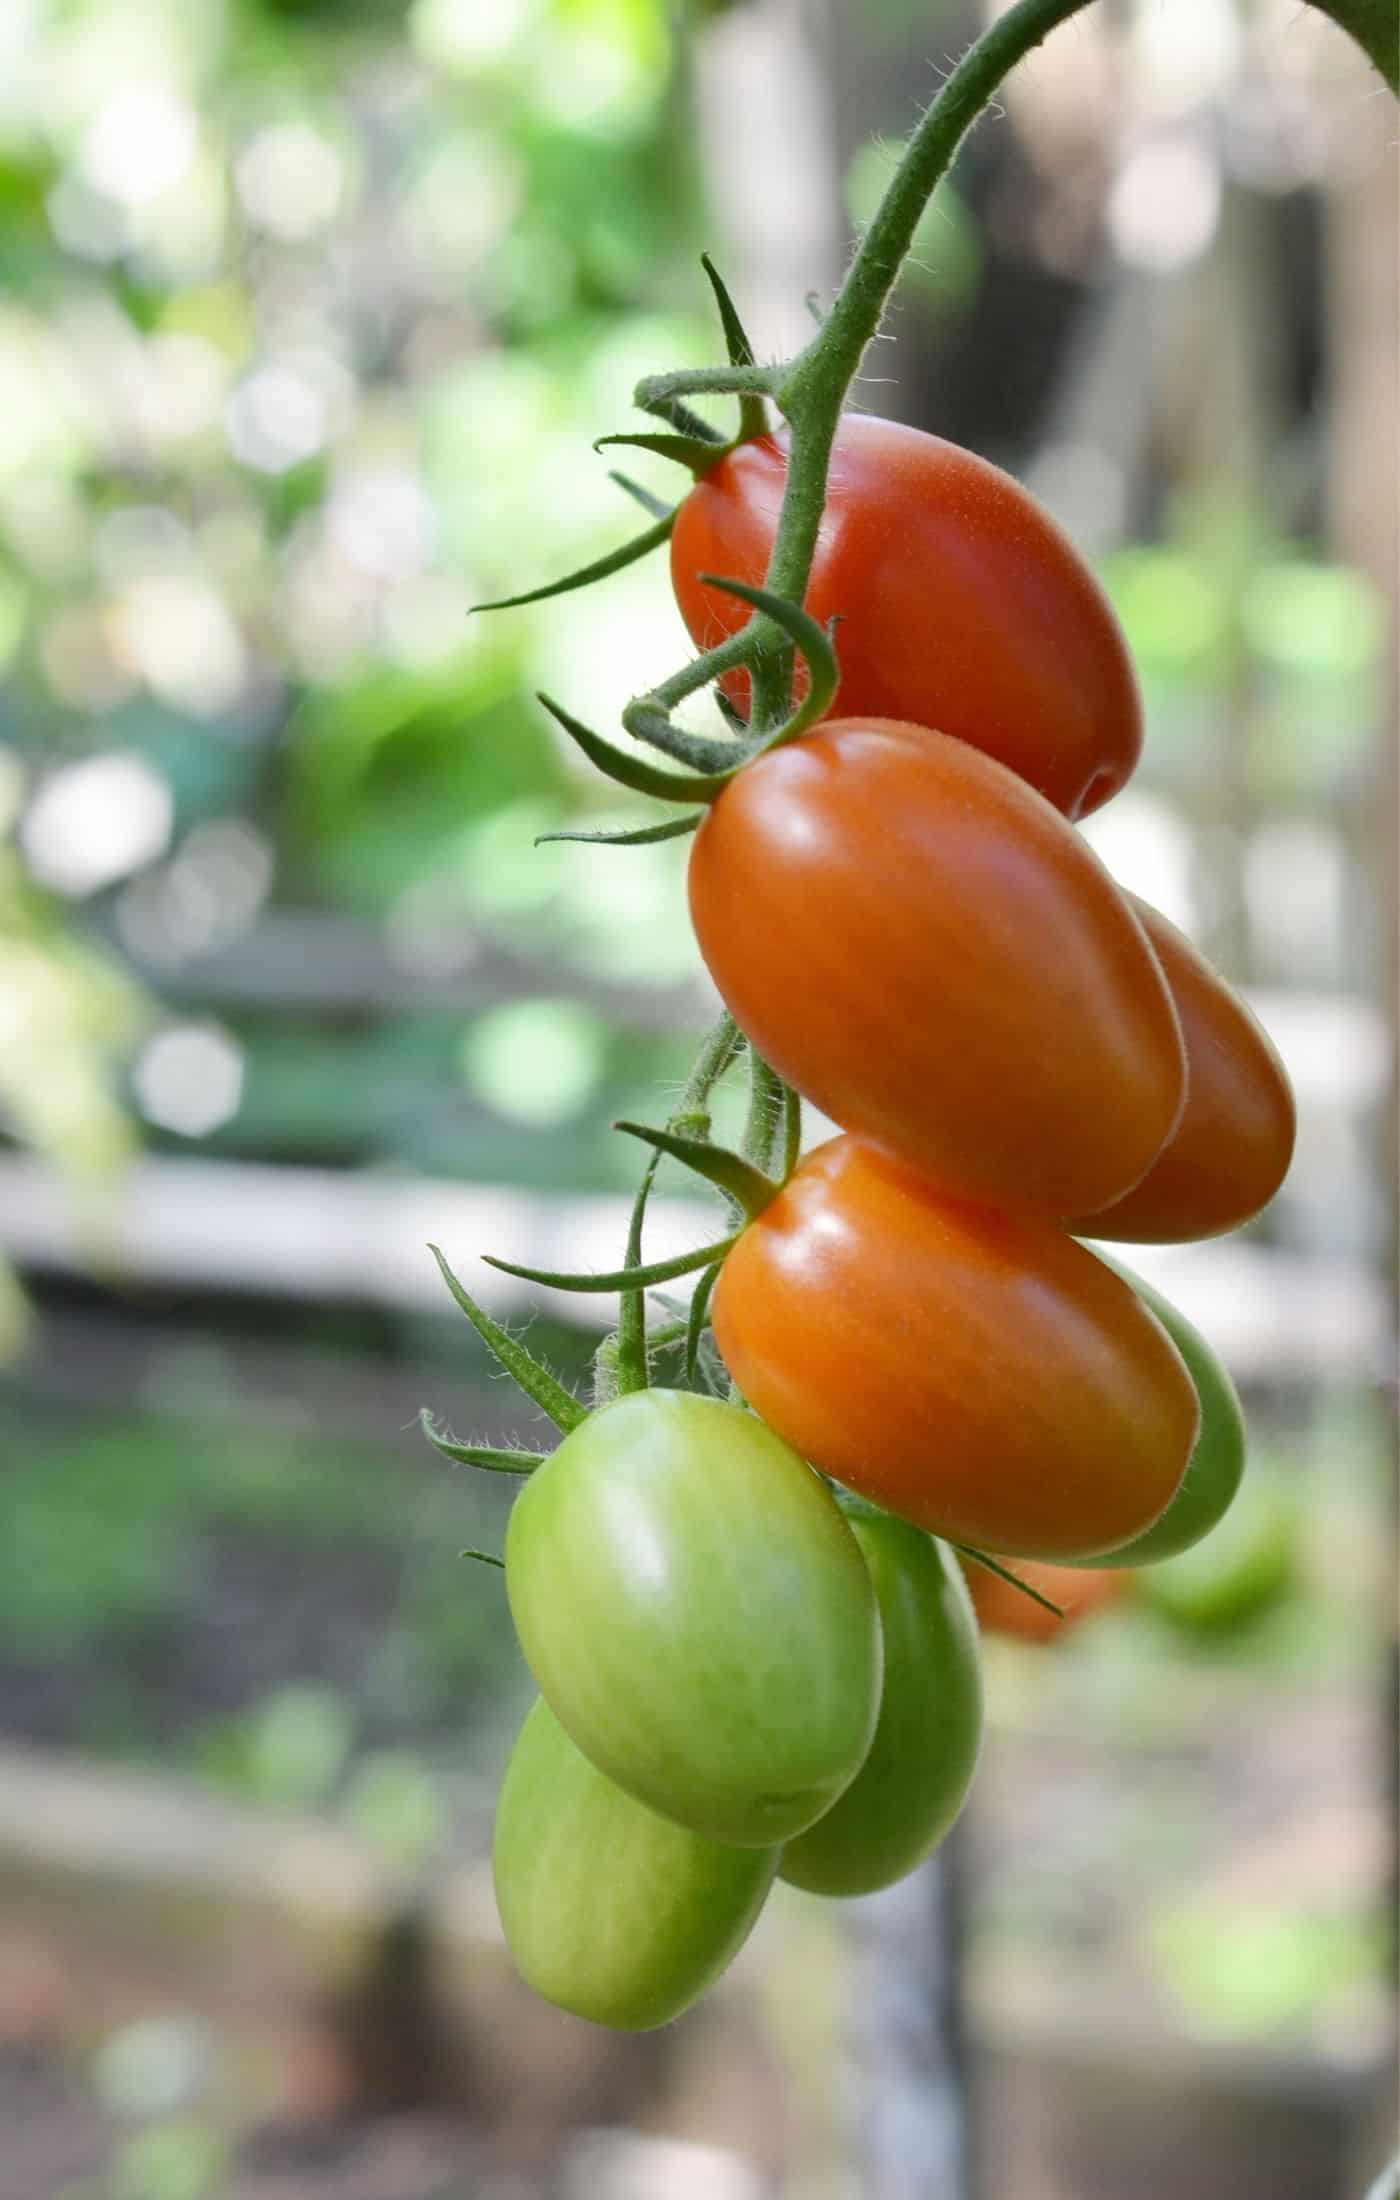 Growing juliet tomatoes